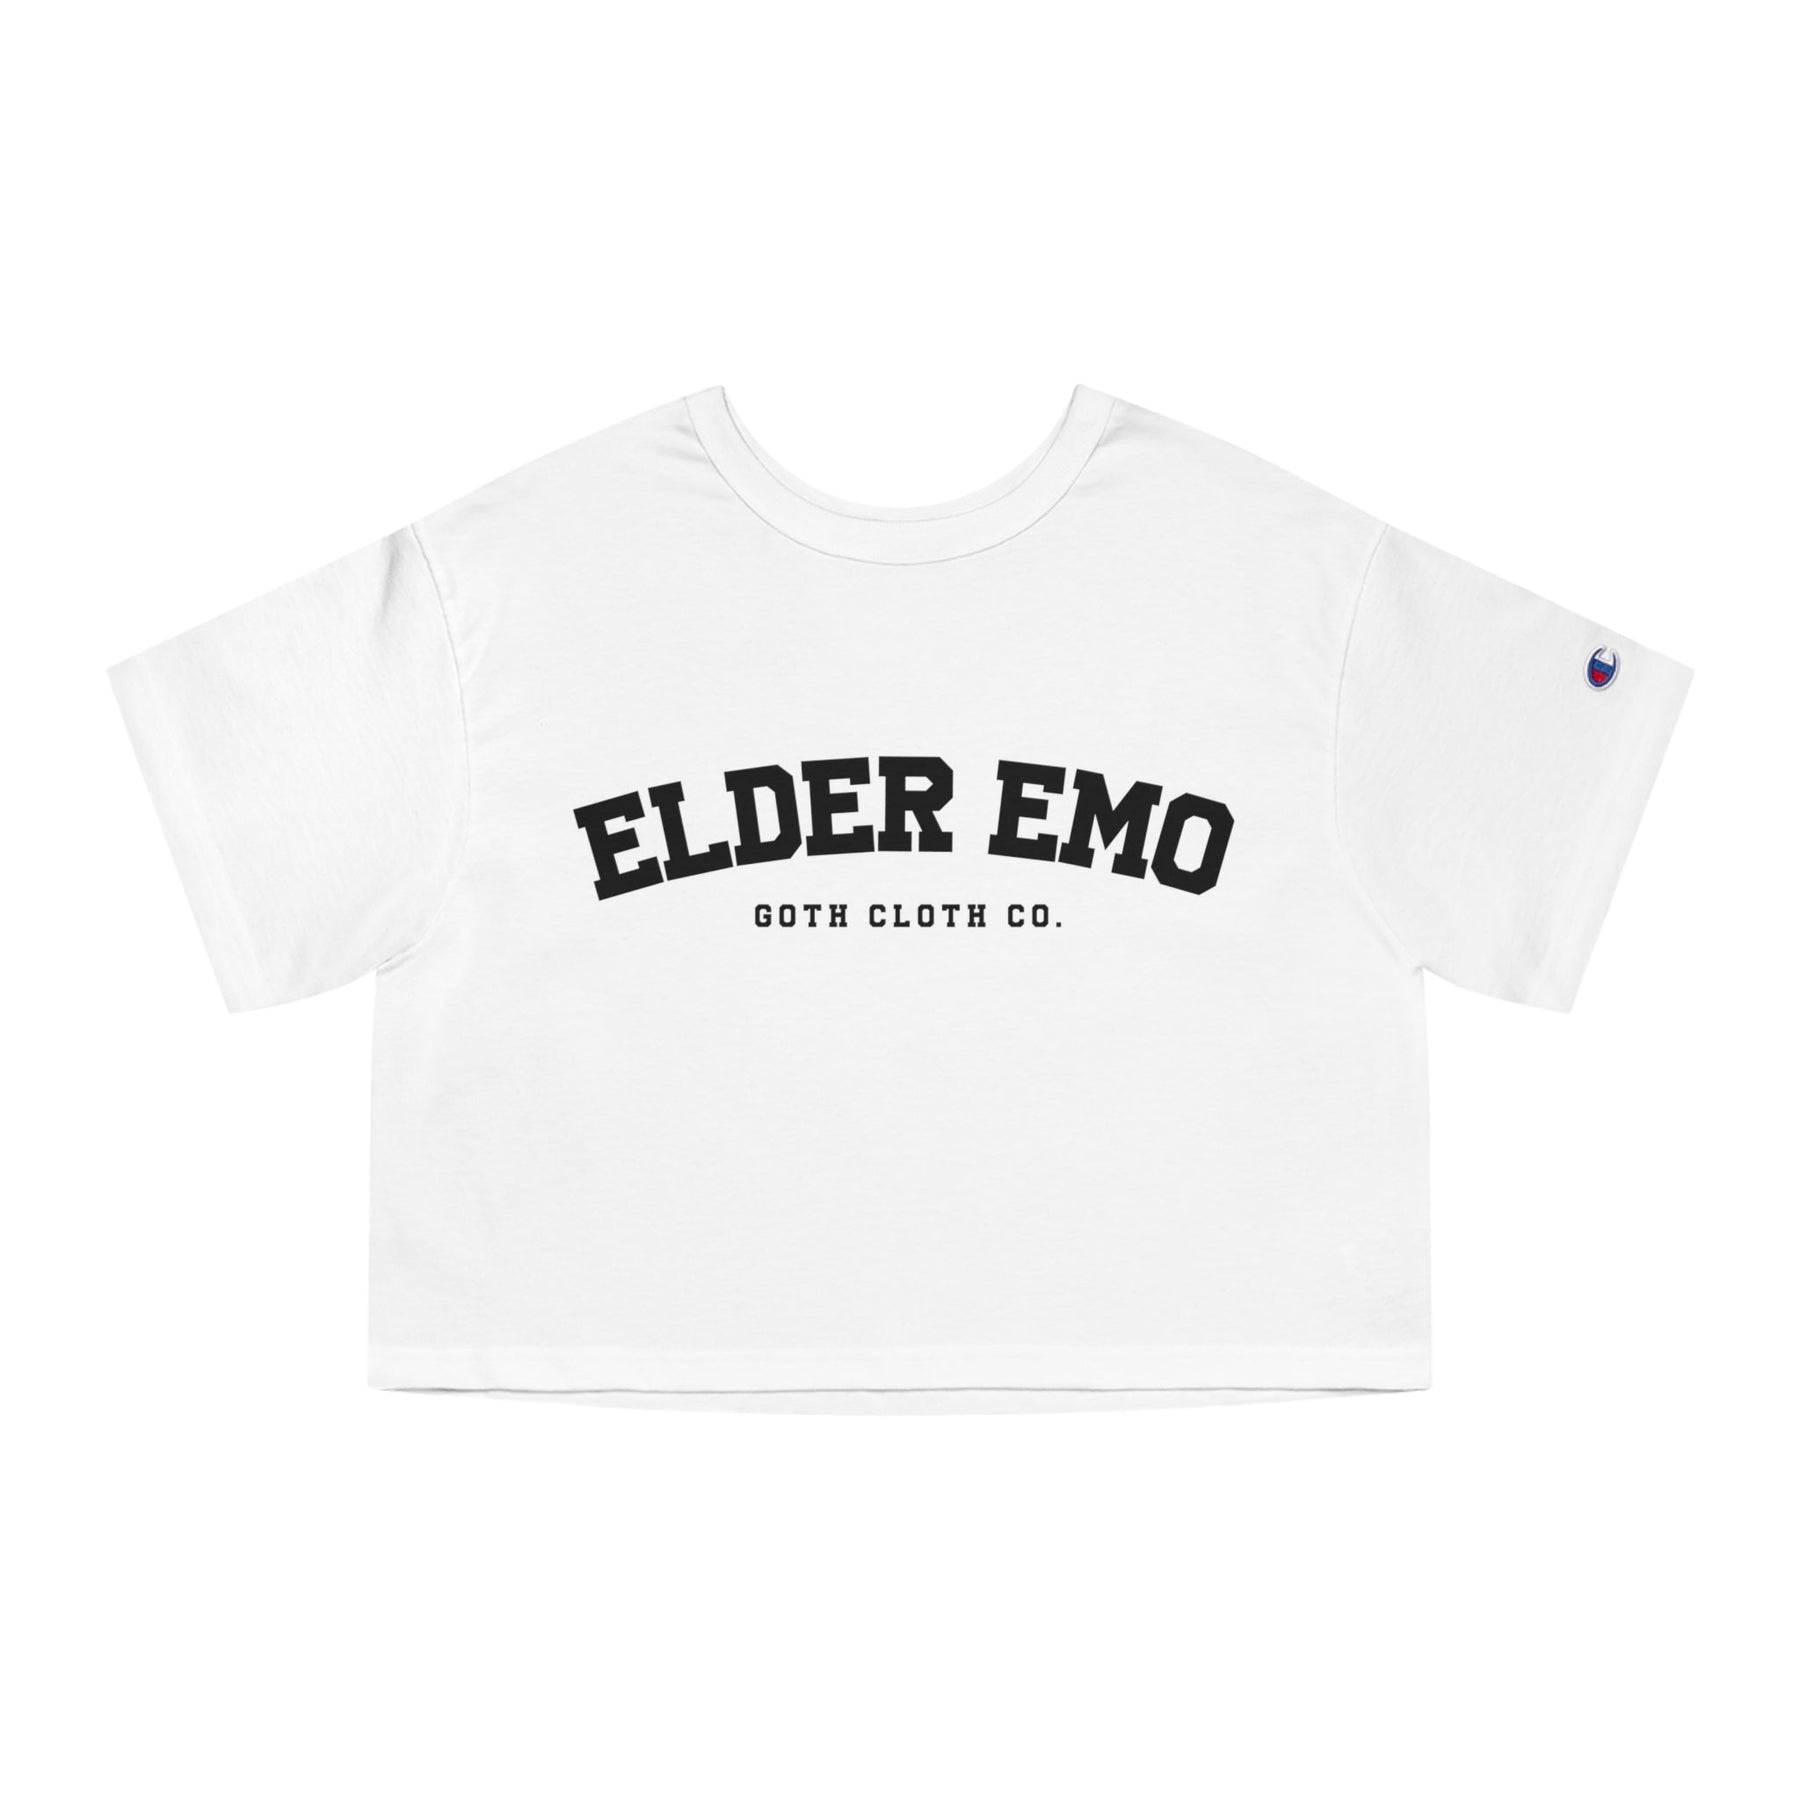 Elder Emo College Heavyweight Cropped T-Shirt - Goth Cloth Co.T-Shirt11386315164621364866